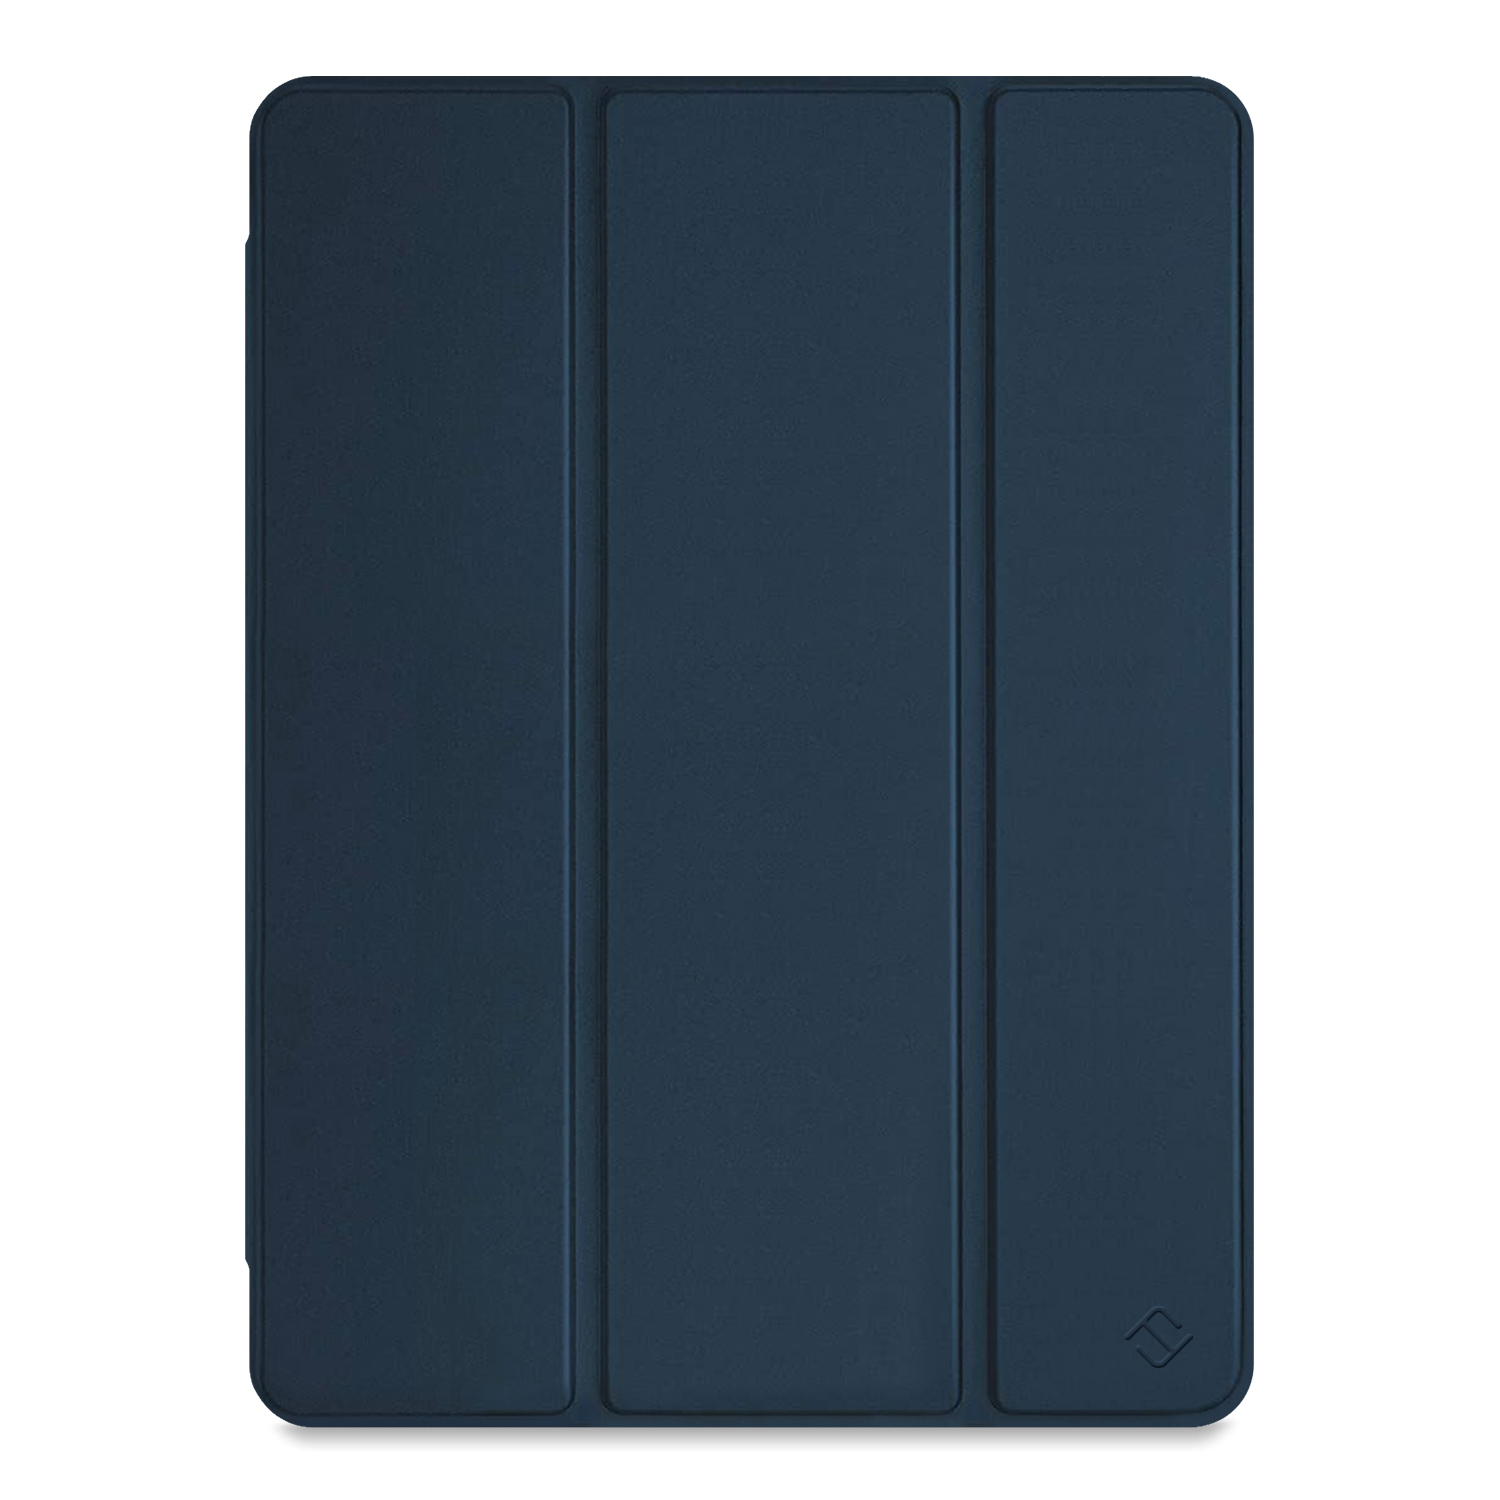 2021/2020/2019), 10.2 Zoll Bookcover, Marineblau (9/8/7 Generation FINTIE - iPad, Hülle, iPad